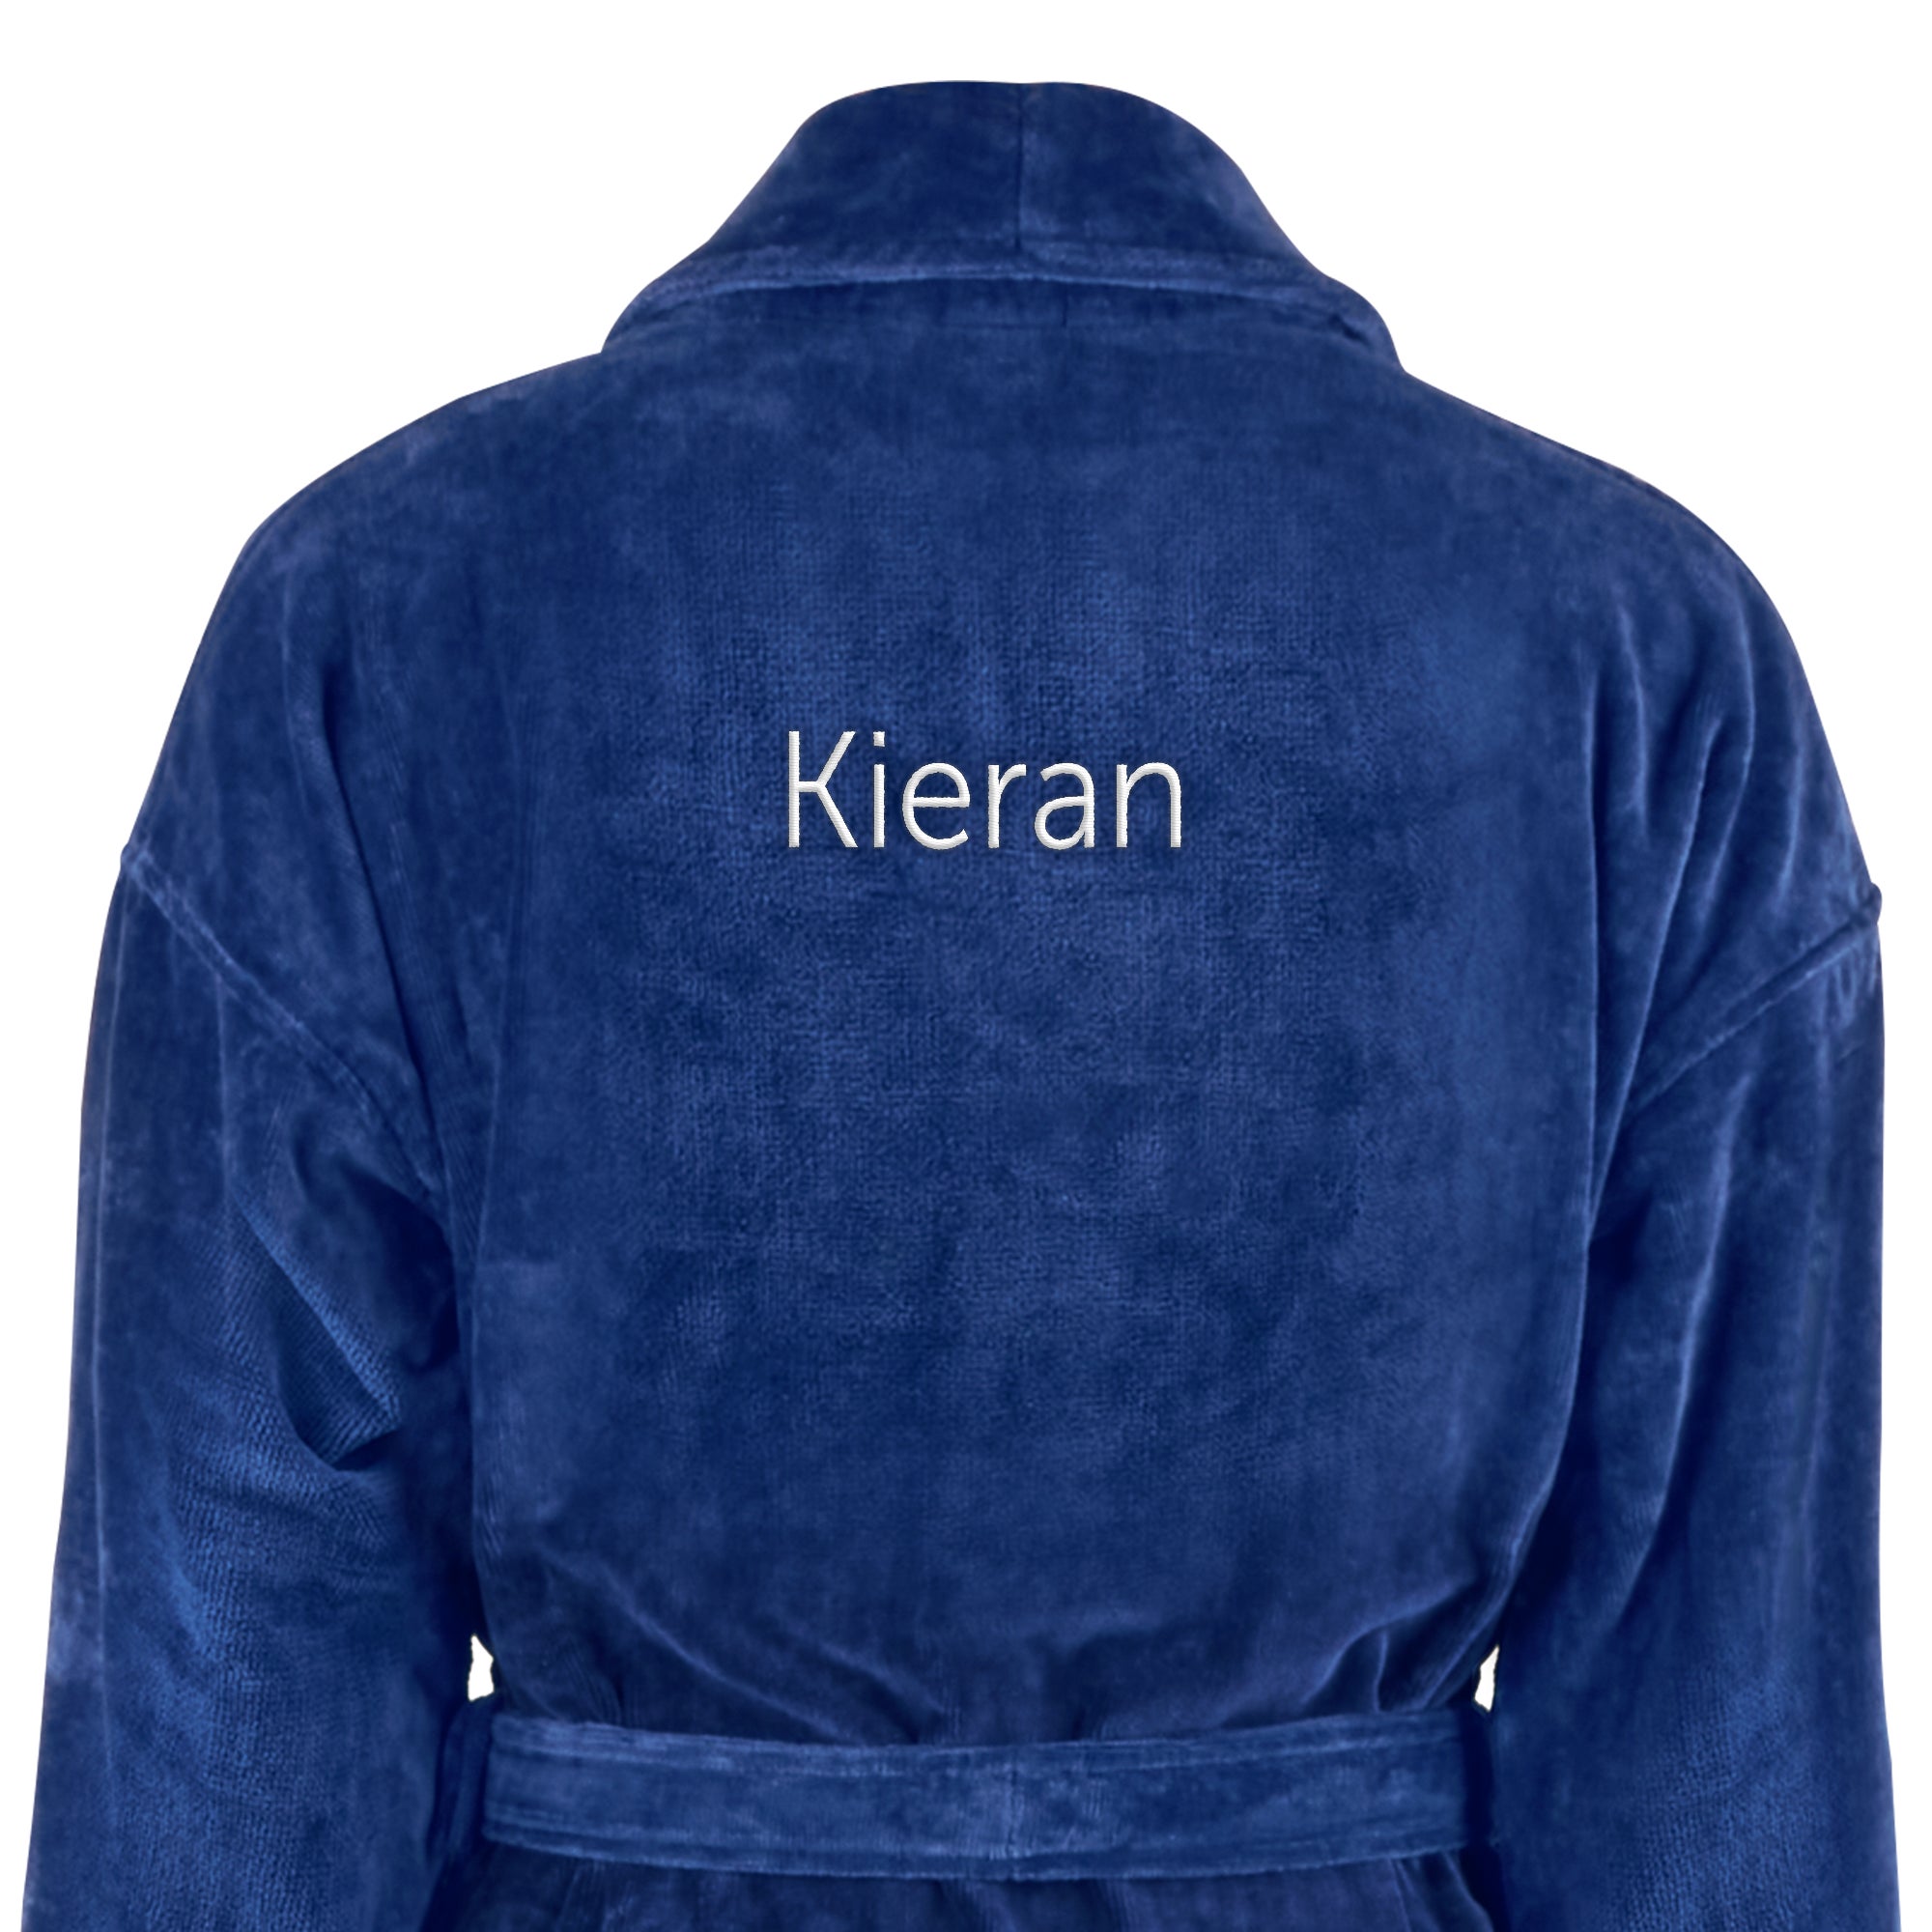 Personalised bathrobe - Men - Blue - S/M